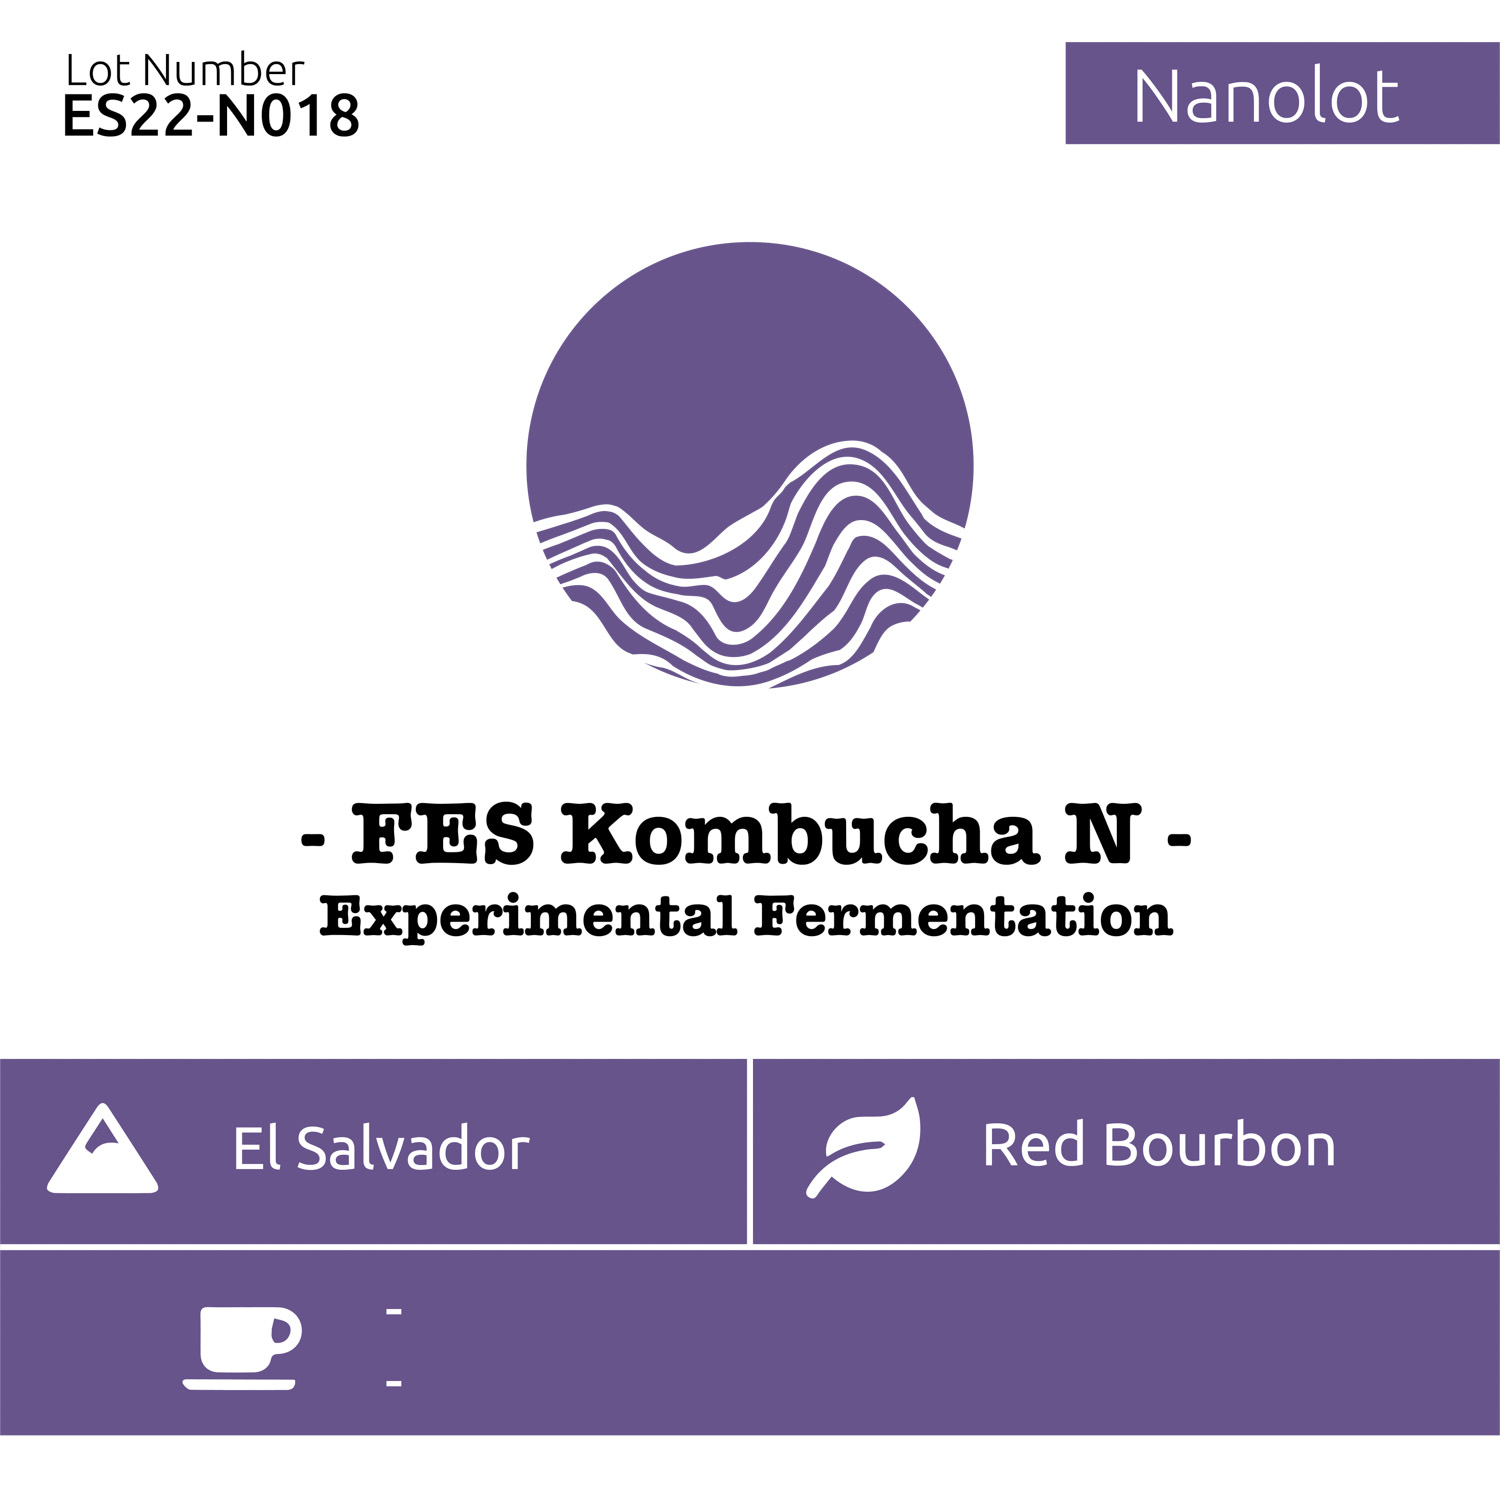 fes kombucha n - experimental fermentation